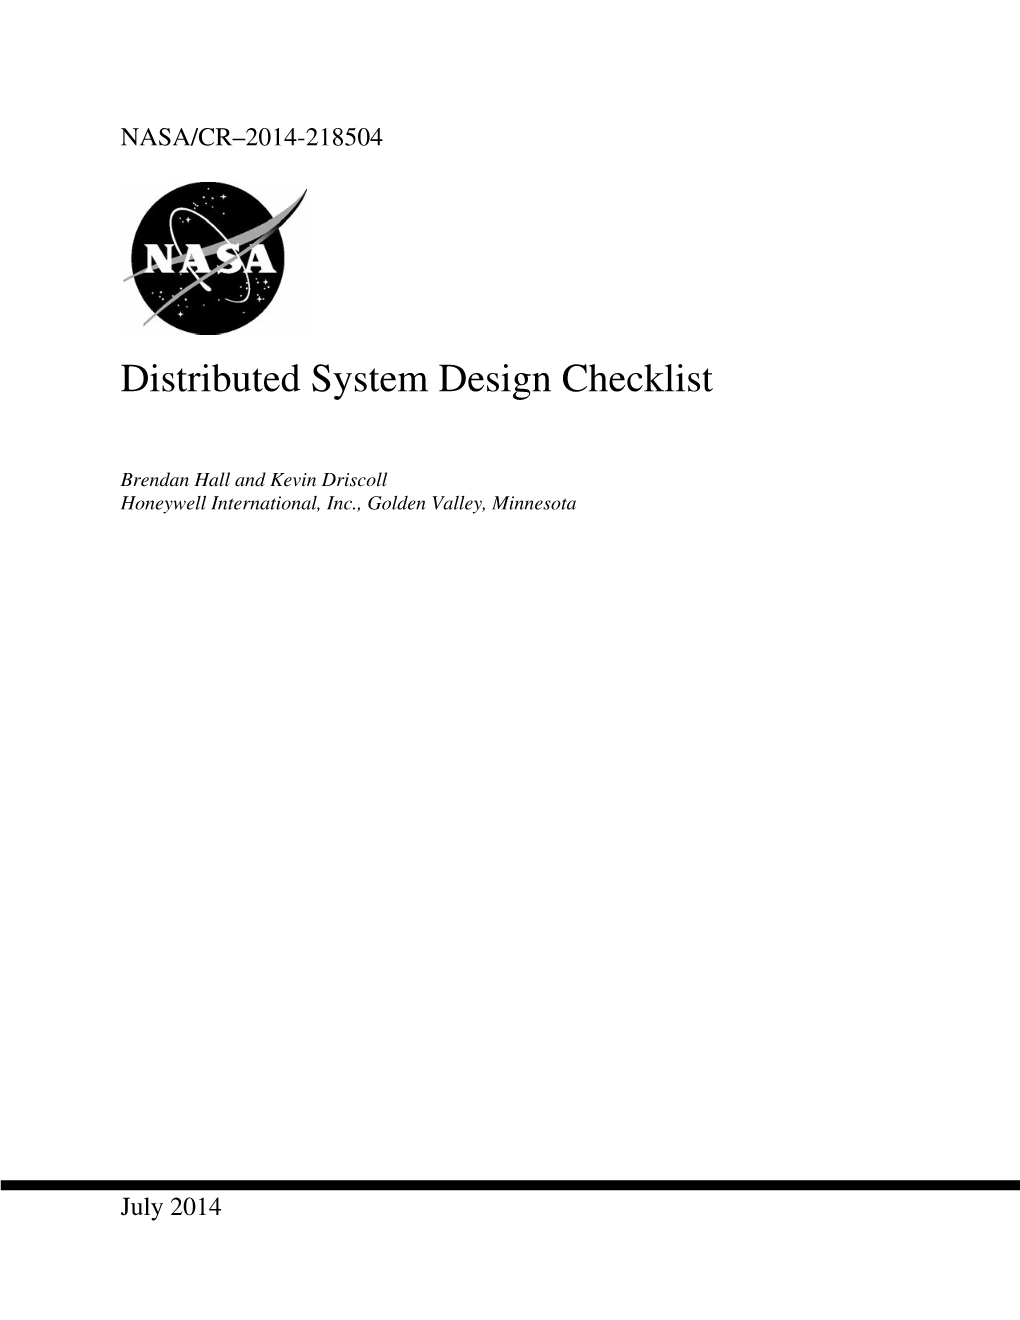 Distributed System Design Checklist